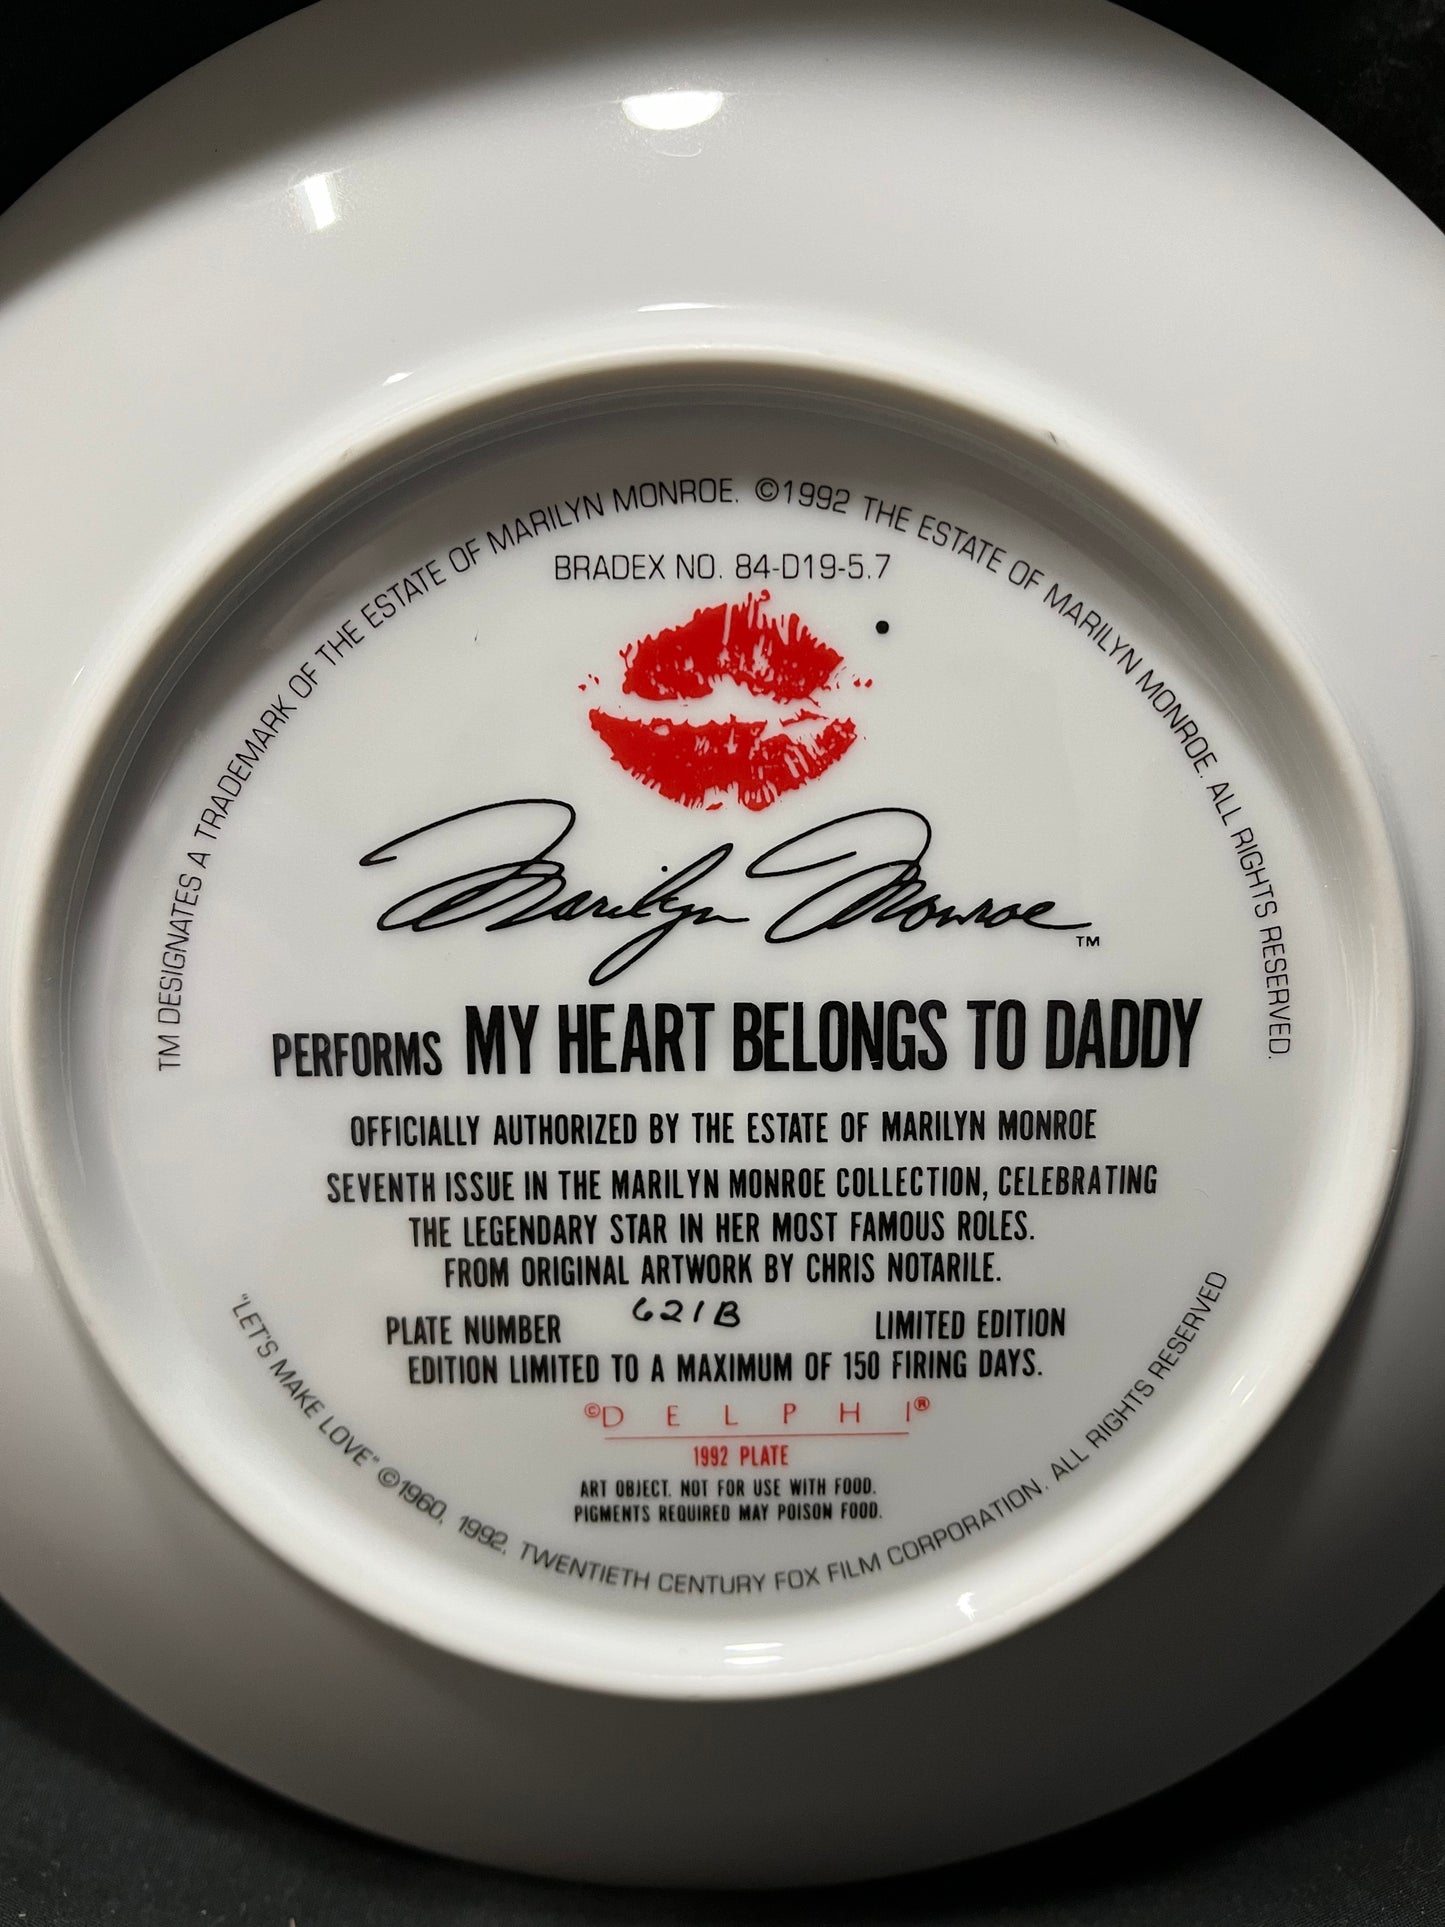 Marilyn Munroe 1992 Delphi Plate "My Heart Belongs To Daddy" for Bradford Exchange